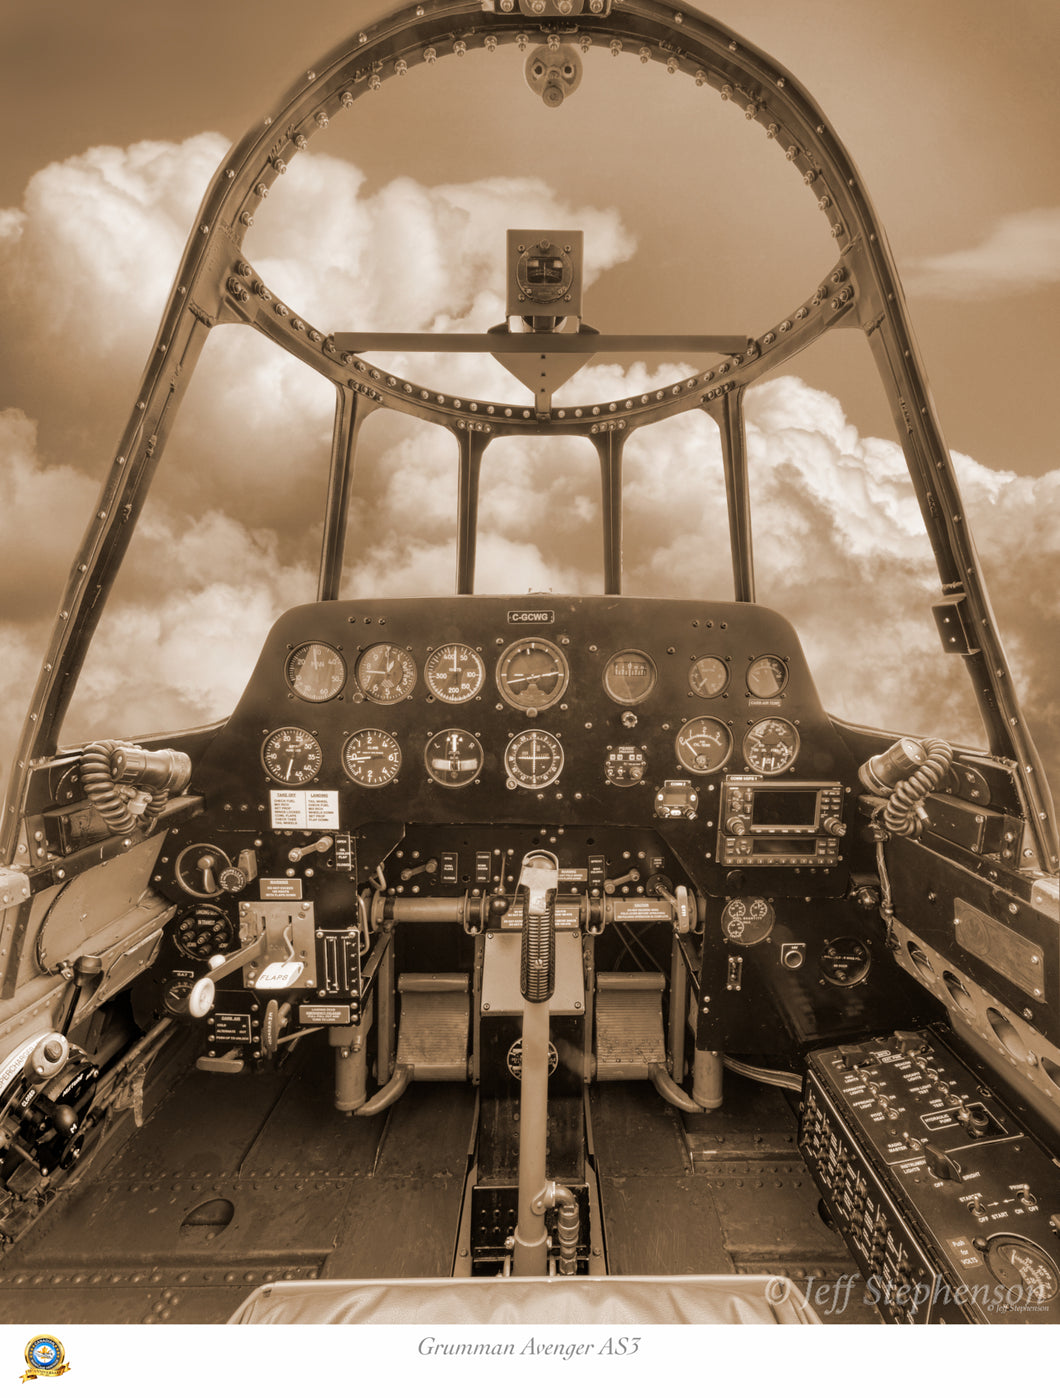 Grumman Avenger AS 3 - Cockpit Series